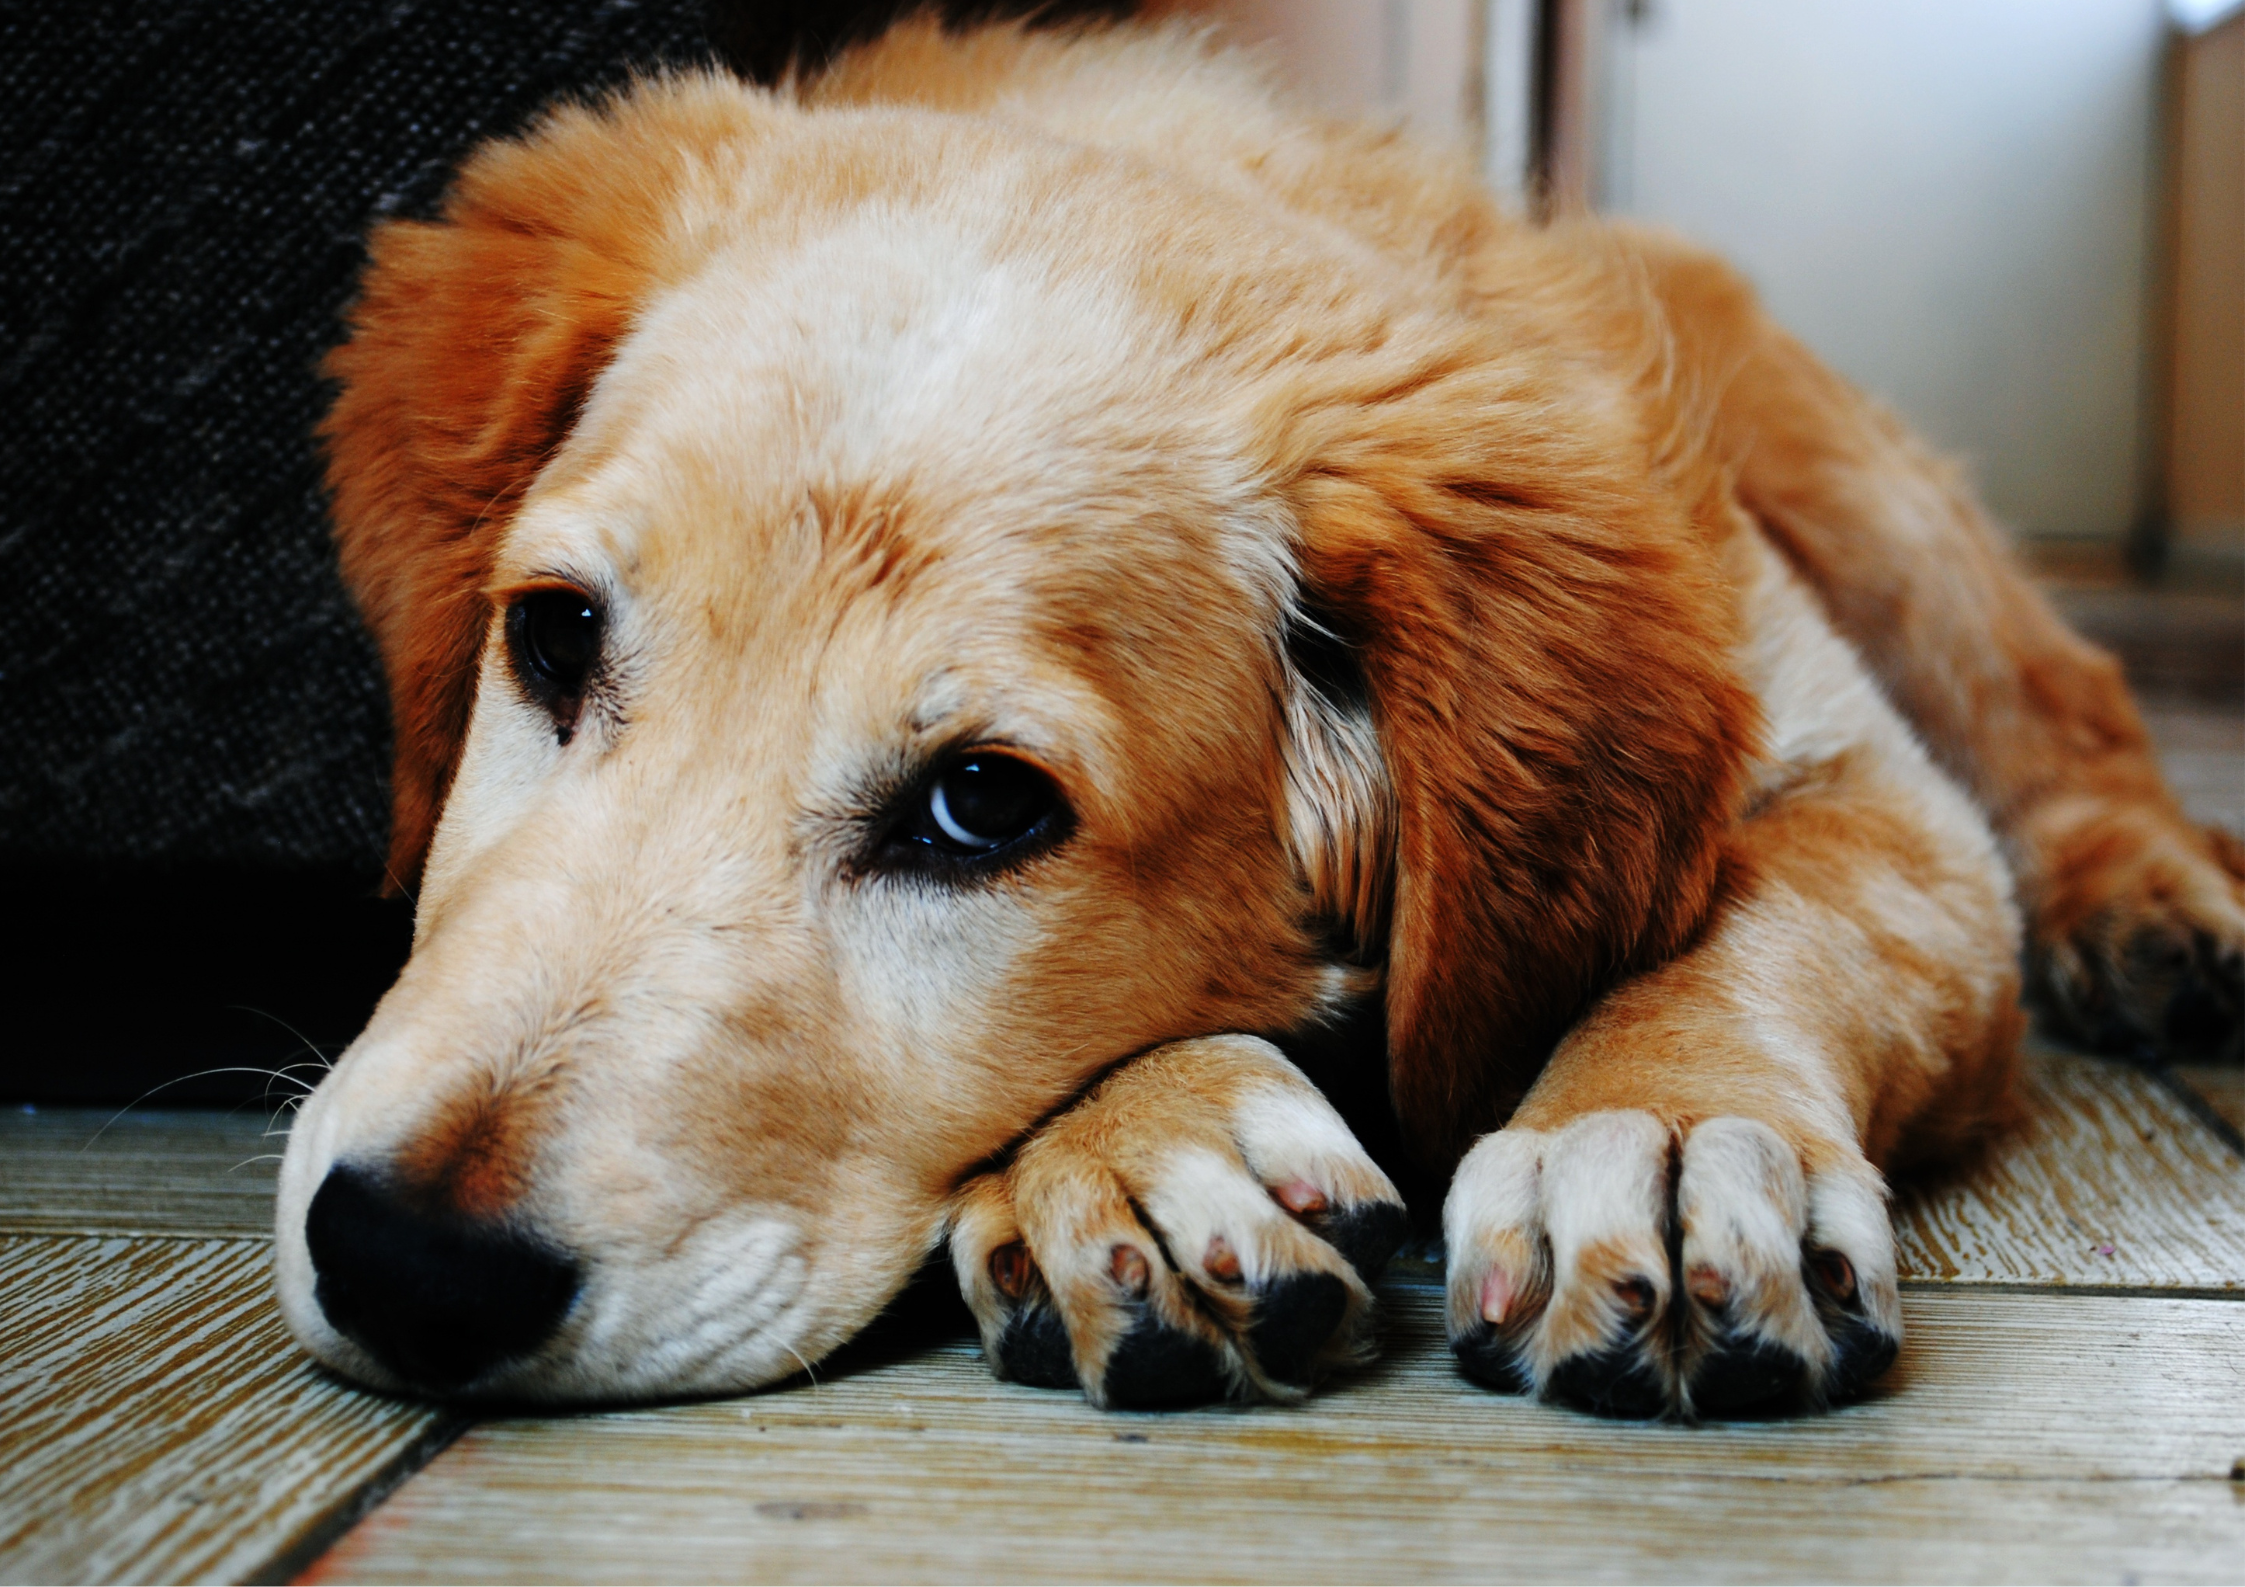 Pets and Divorce/Separation – Should you have a “Pet-Nup”?